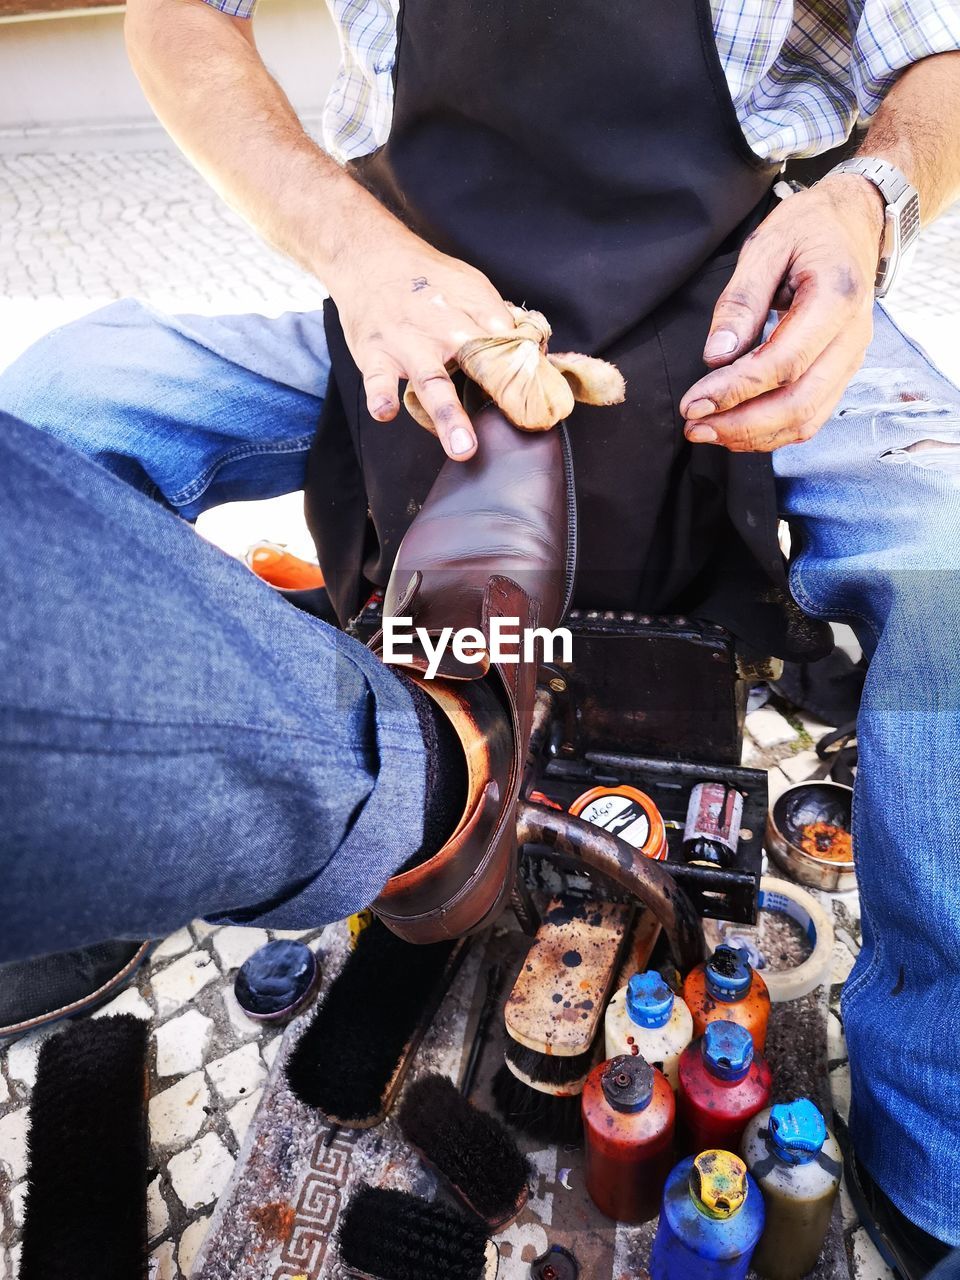 Man polishing shoe of customer in city